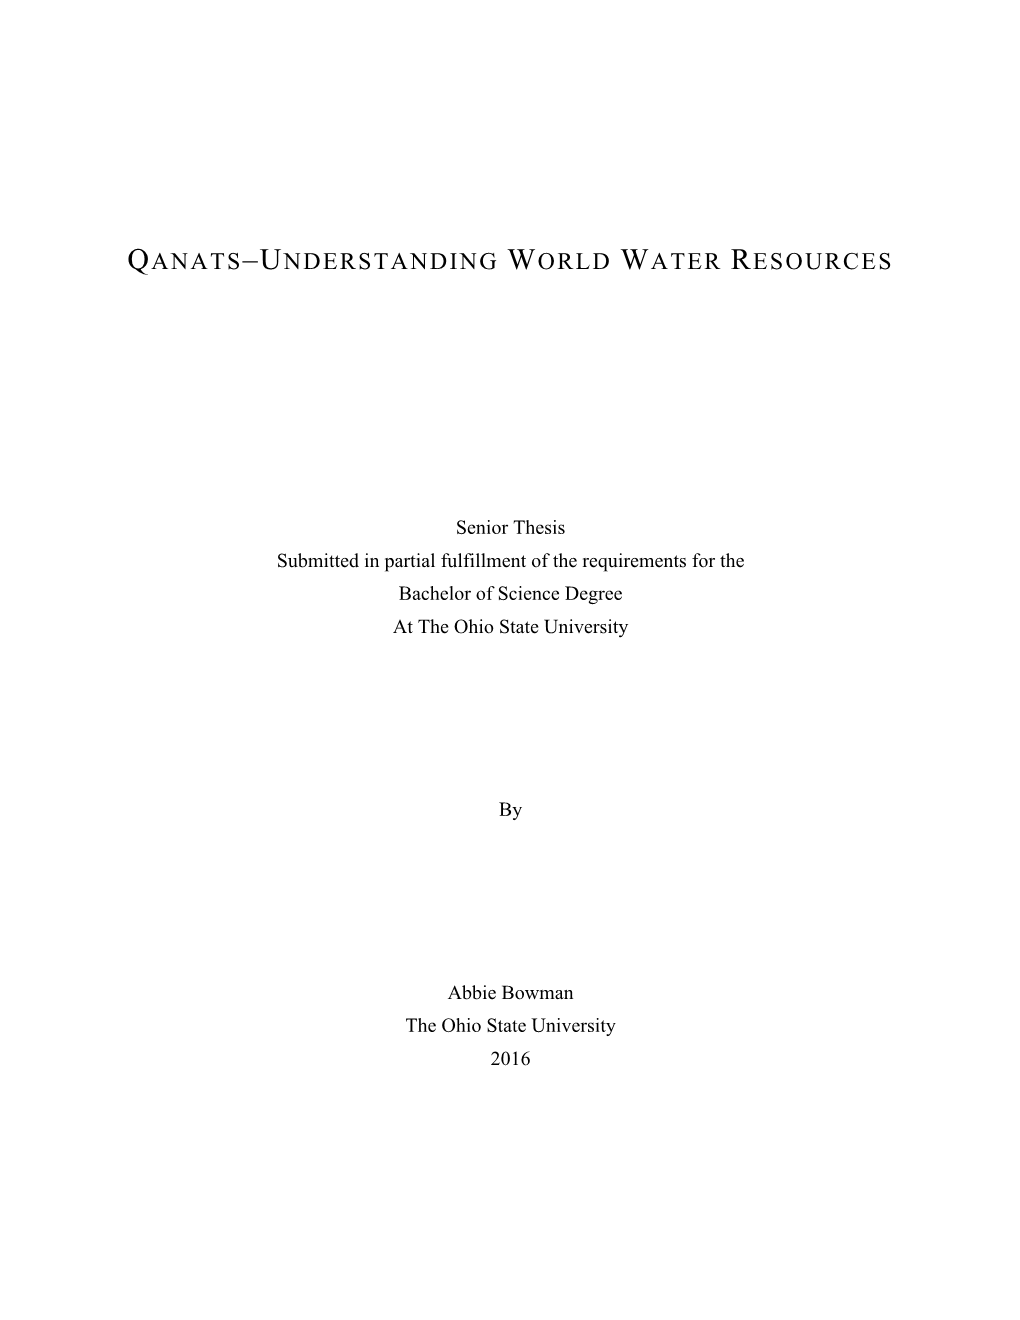 Qanats–Understanding World Water Resources